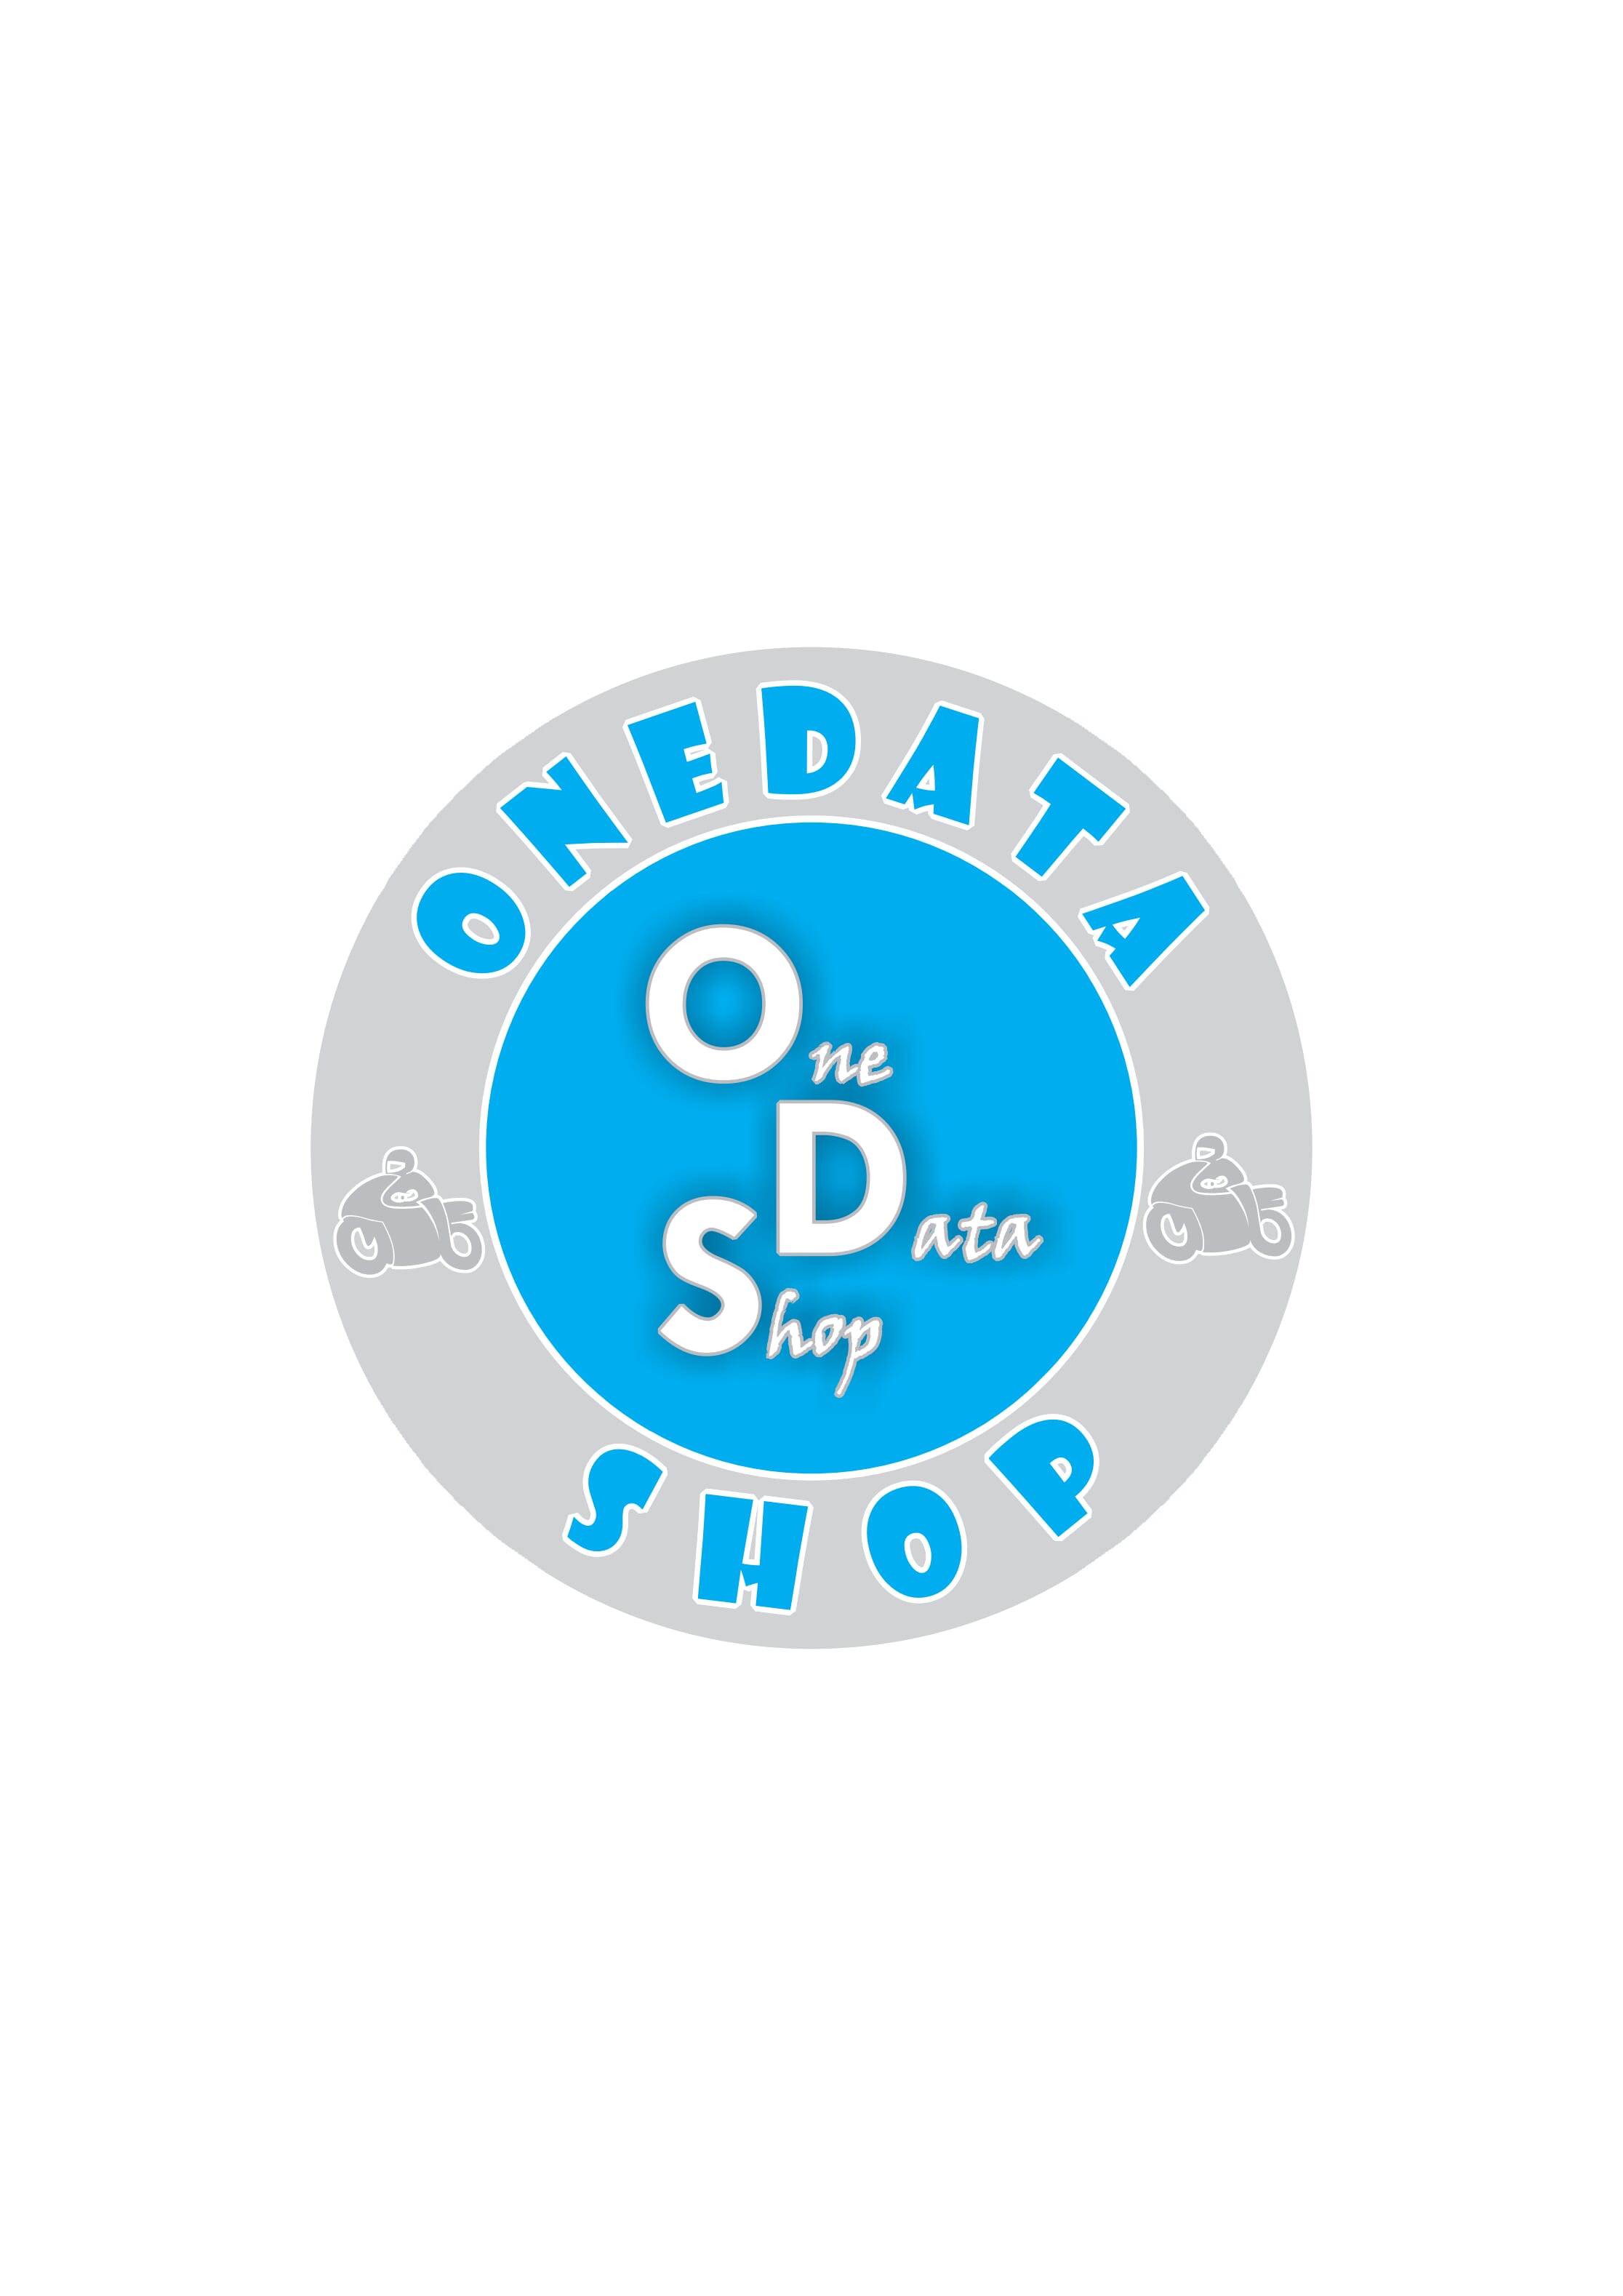 Onedata Shop